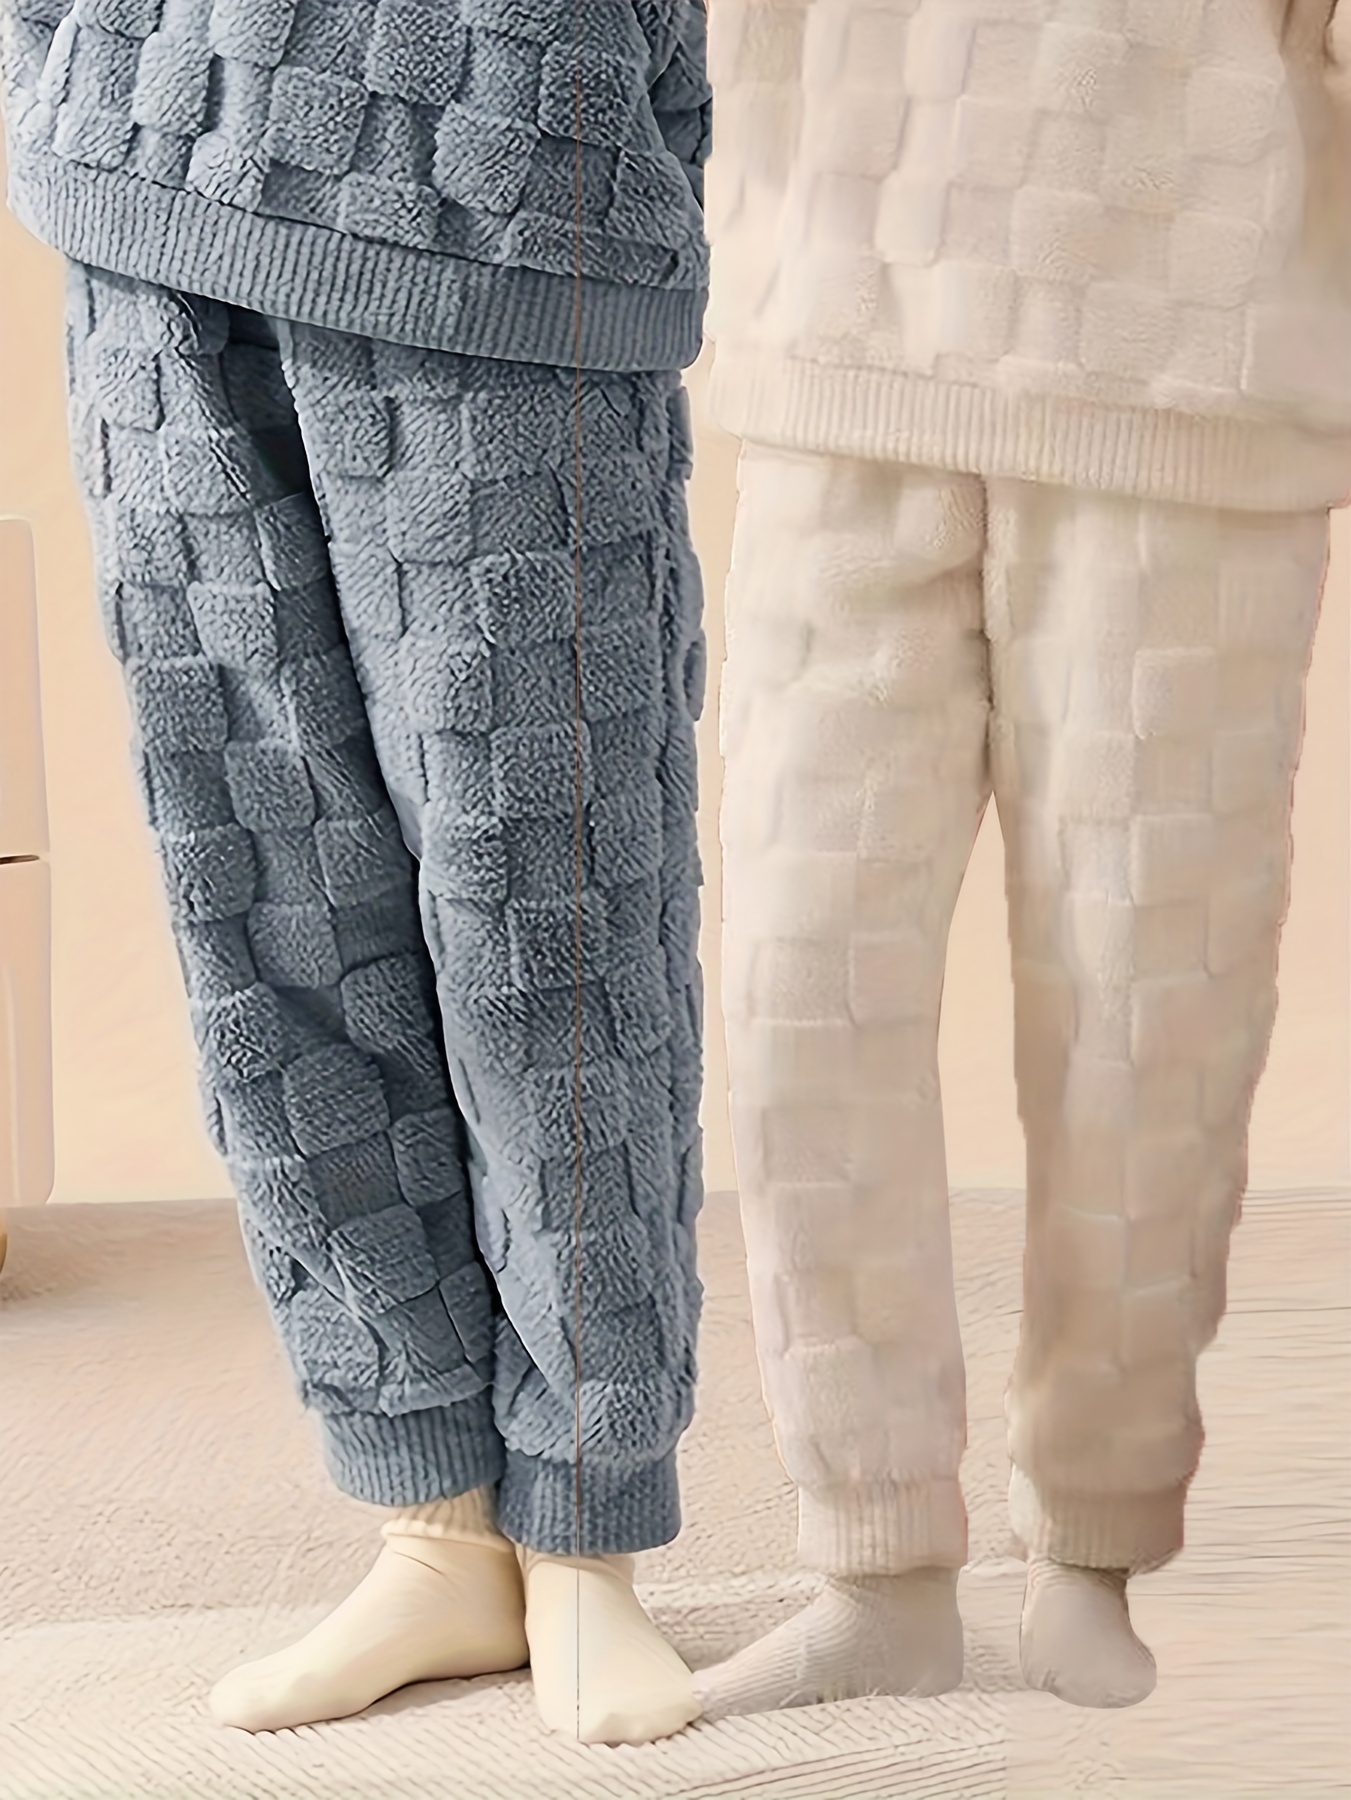 Women's Soft Pajama Pants,lounge Pants,sleep Pants